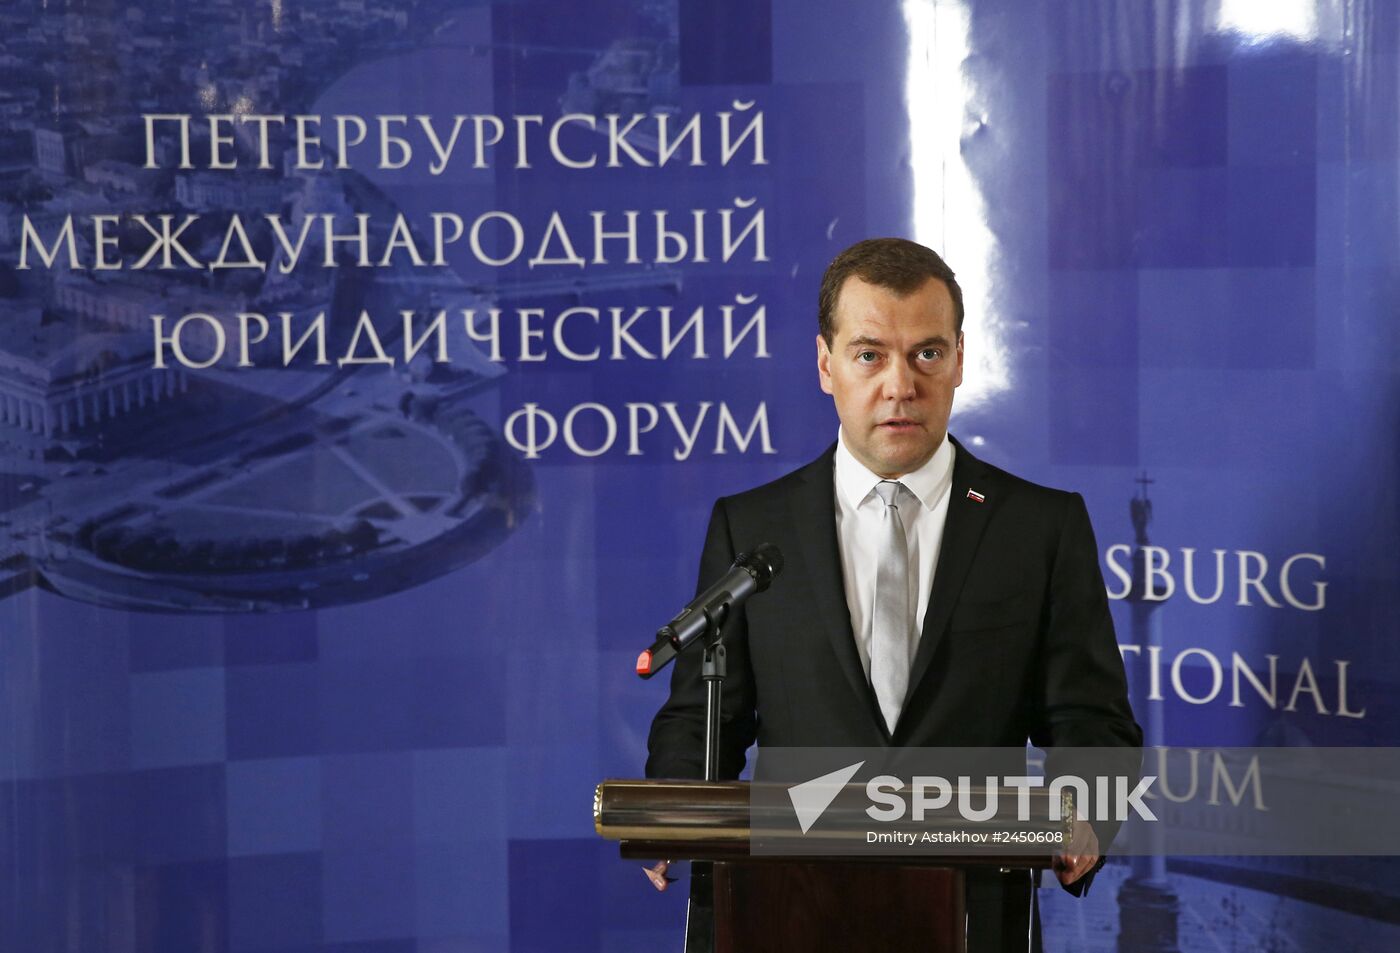 Dmitry Medvedev visits Northwestern Federal District